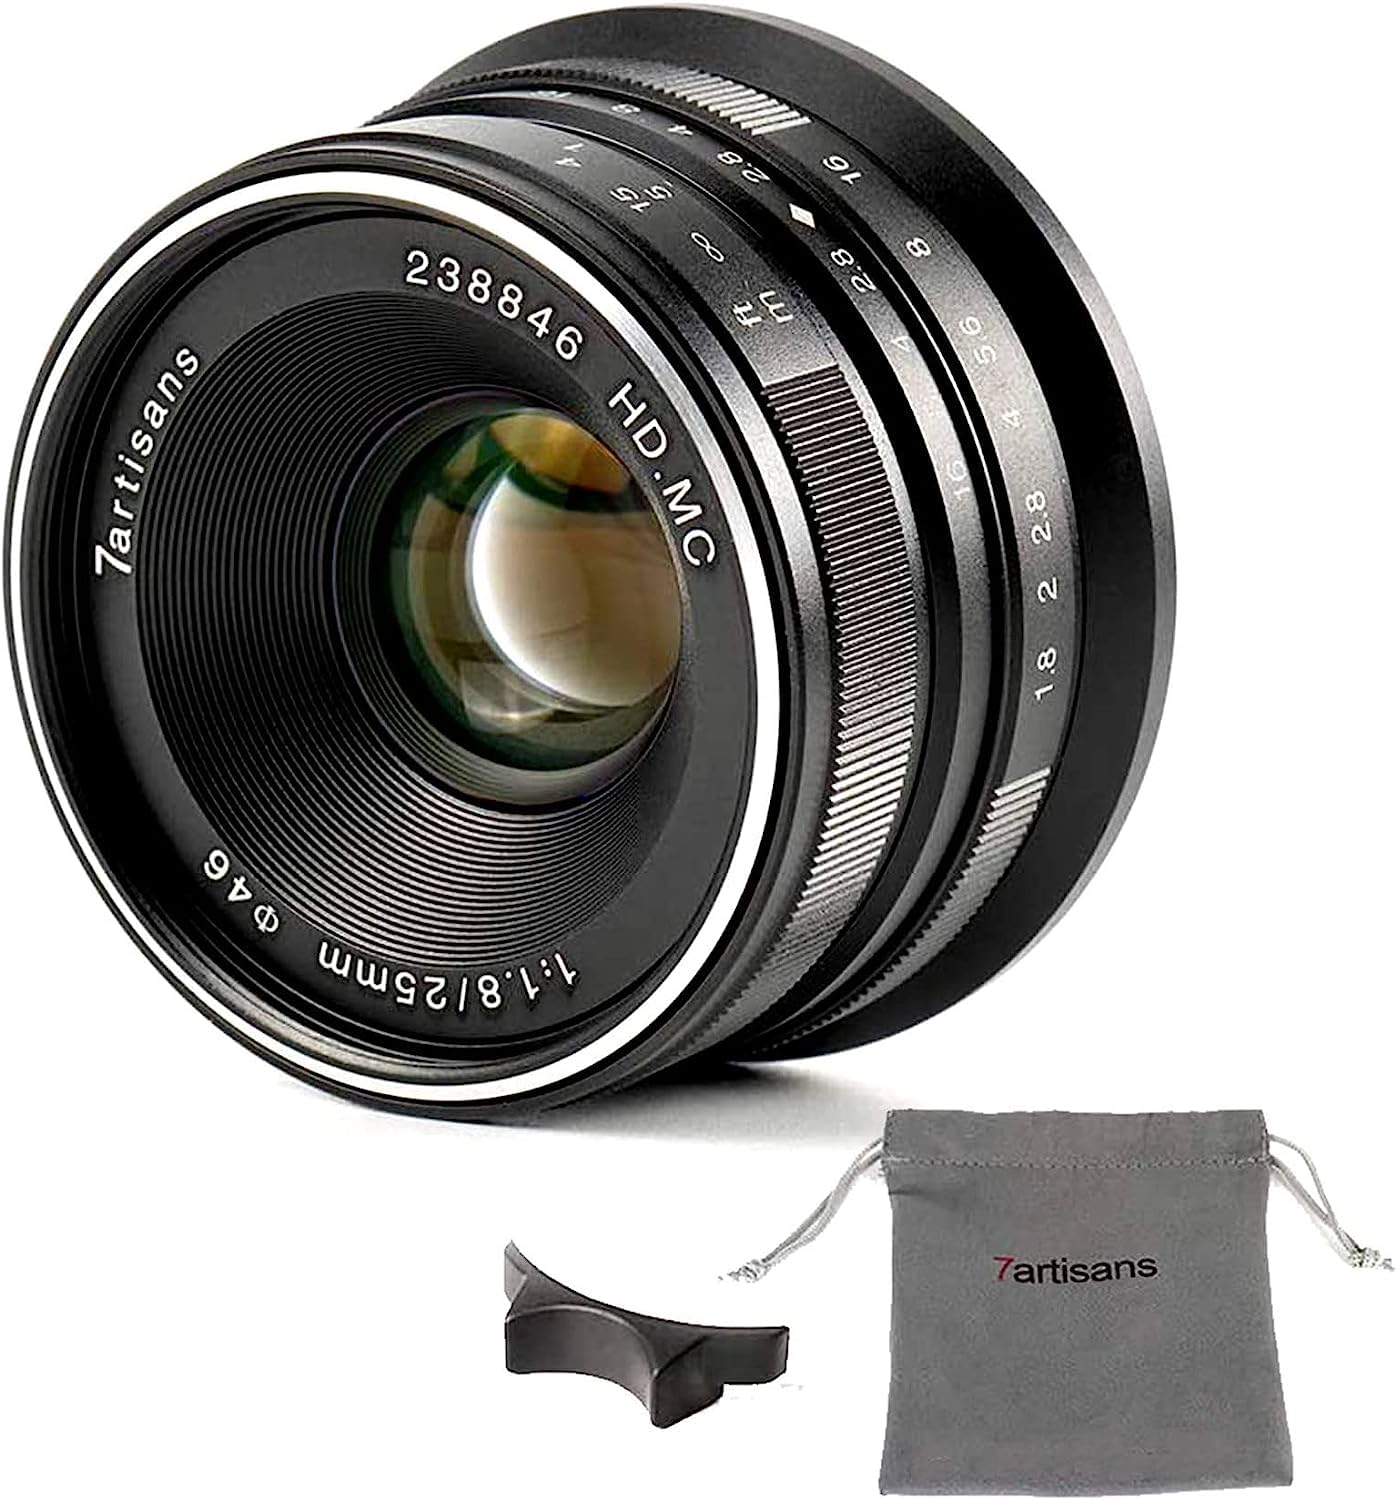 7artisans 25mm F1.8 Manuelle Fokusobjektiv für Sony Emount Kameras wie A7 A7II A7R A7RII A7S A7SII A6500 A6300 A6000 A5100 A5000 EX-3 NEX-3N NEX-3R NEX-F3K NEX-5 NEX-5N - Schwarz